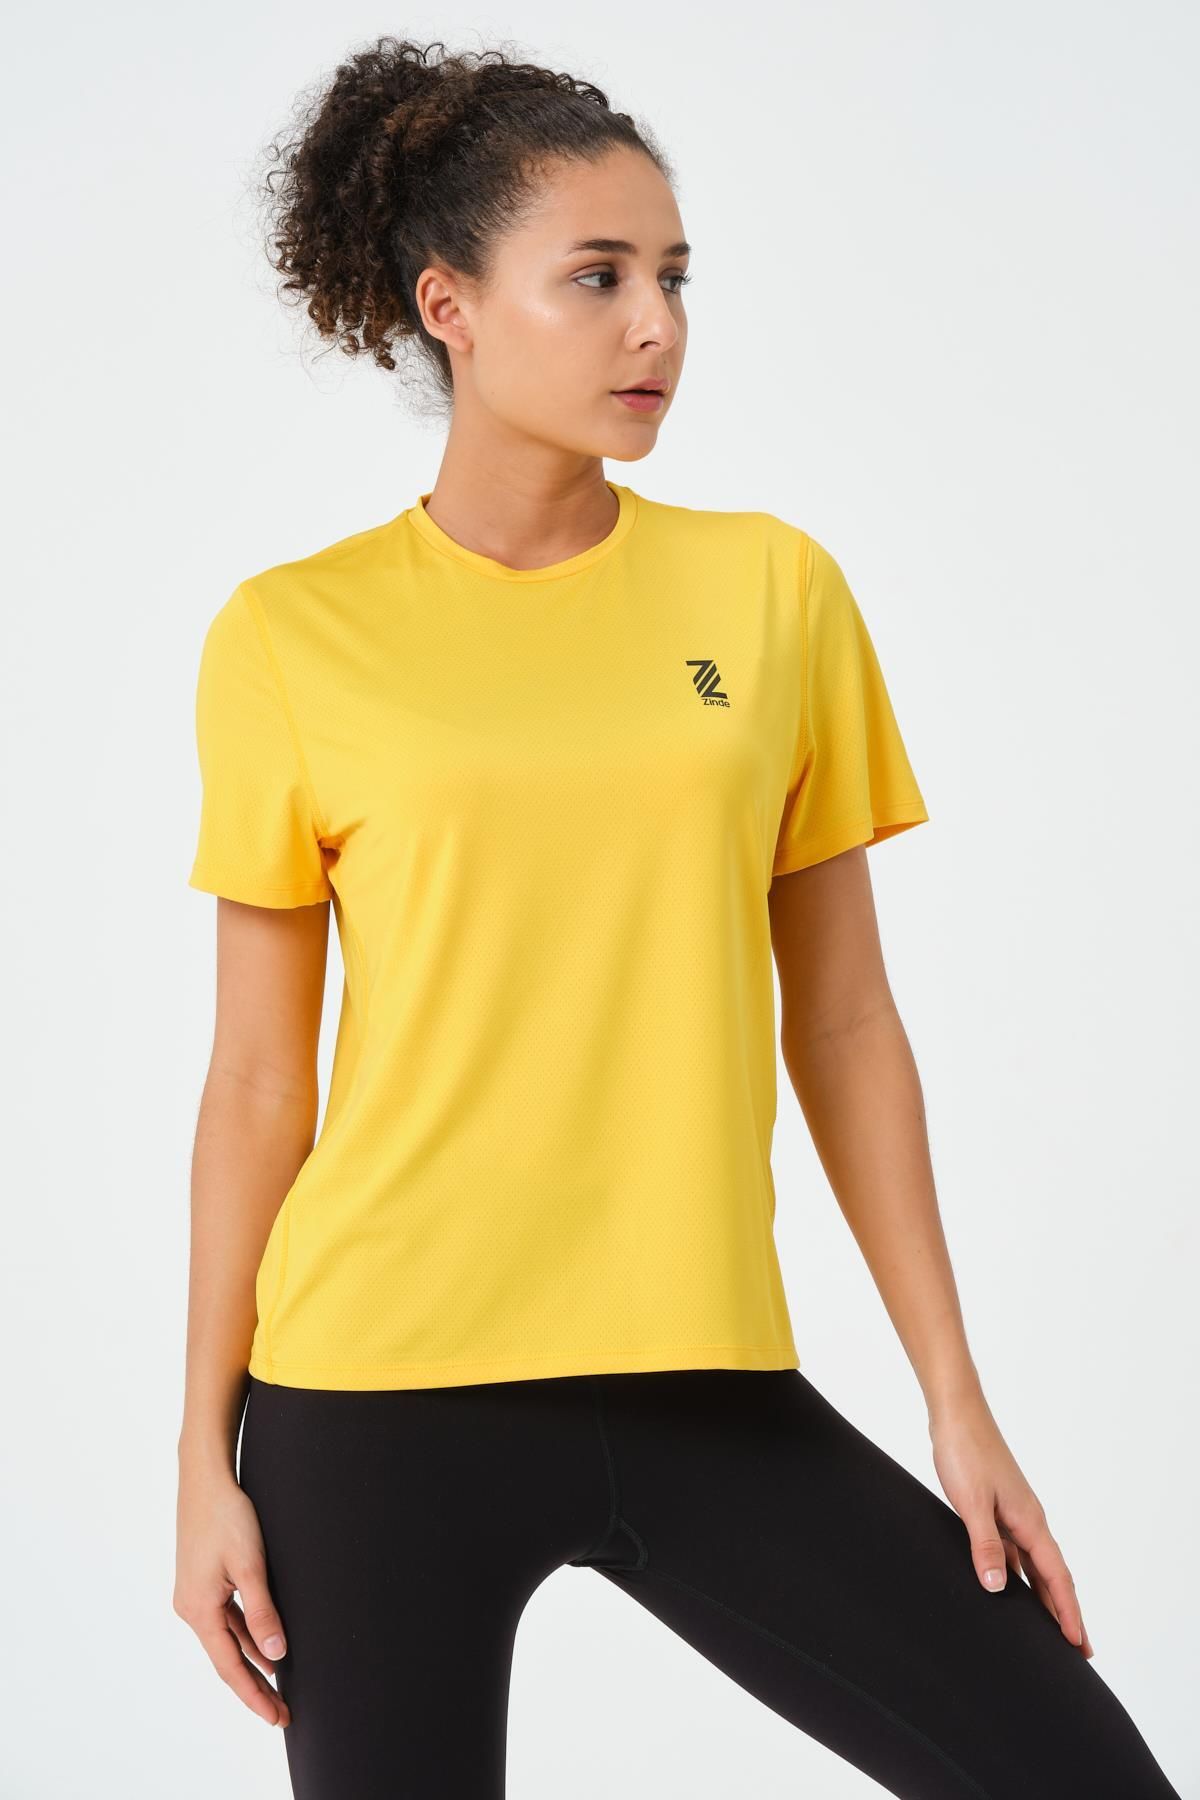 Zinde LIFE P-003000-kadın Bisiklet Yaka Rahat Kesim Casual Nefes Alabilen Athletic Spor T-shirt - Tişört-sarı